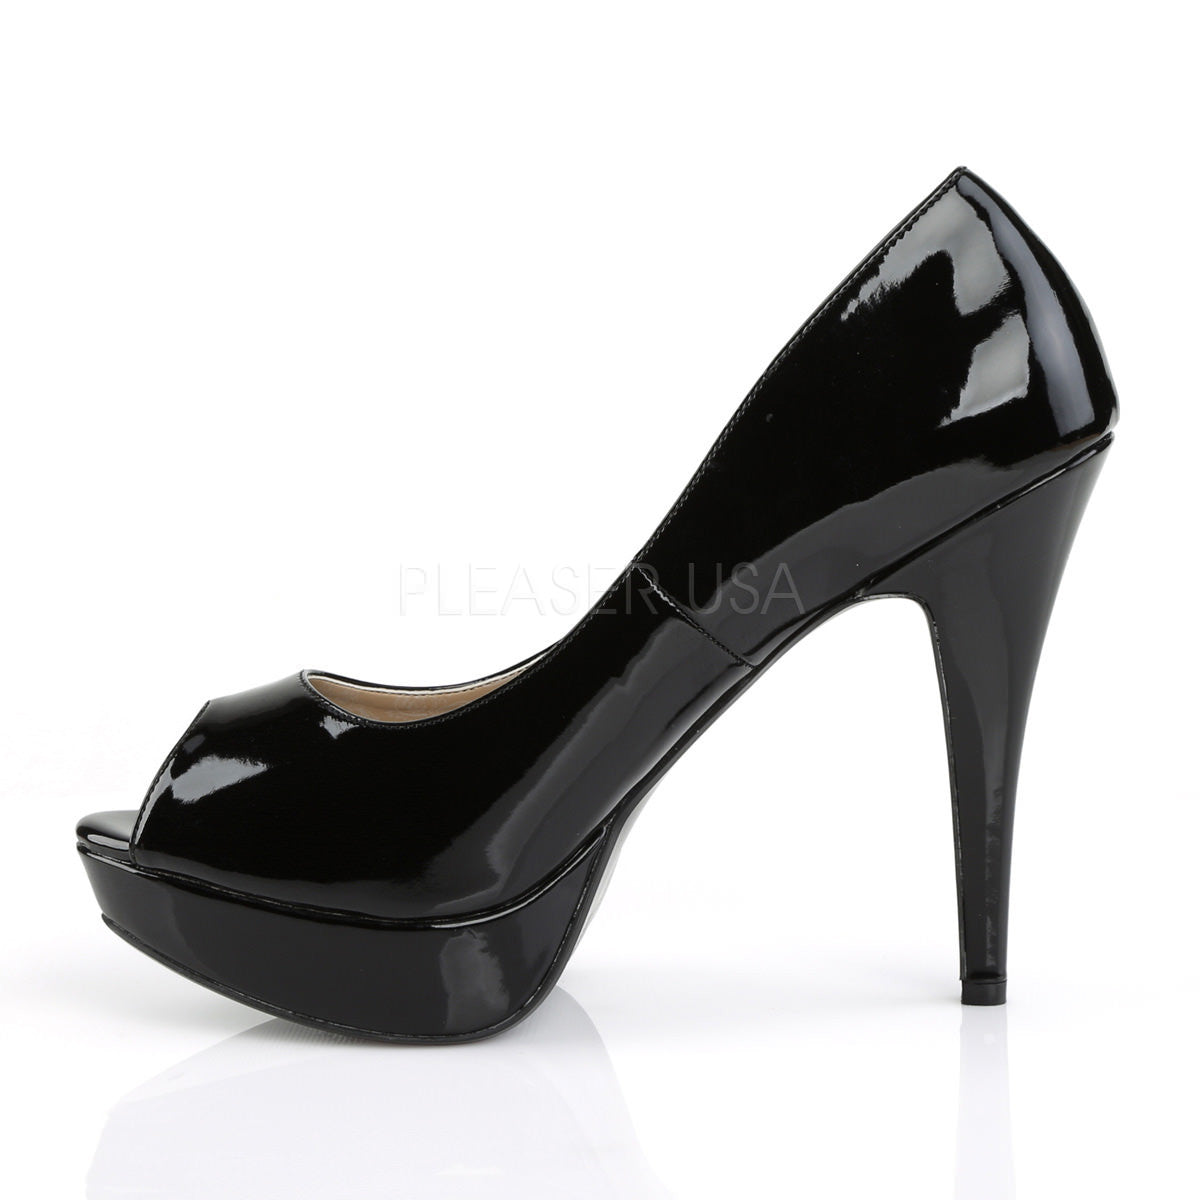 5 Inch Heel CHLOE-01 Black Patent